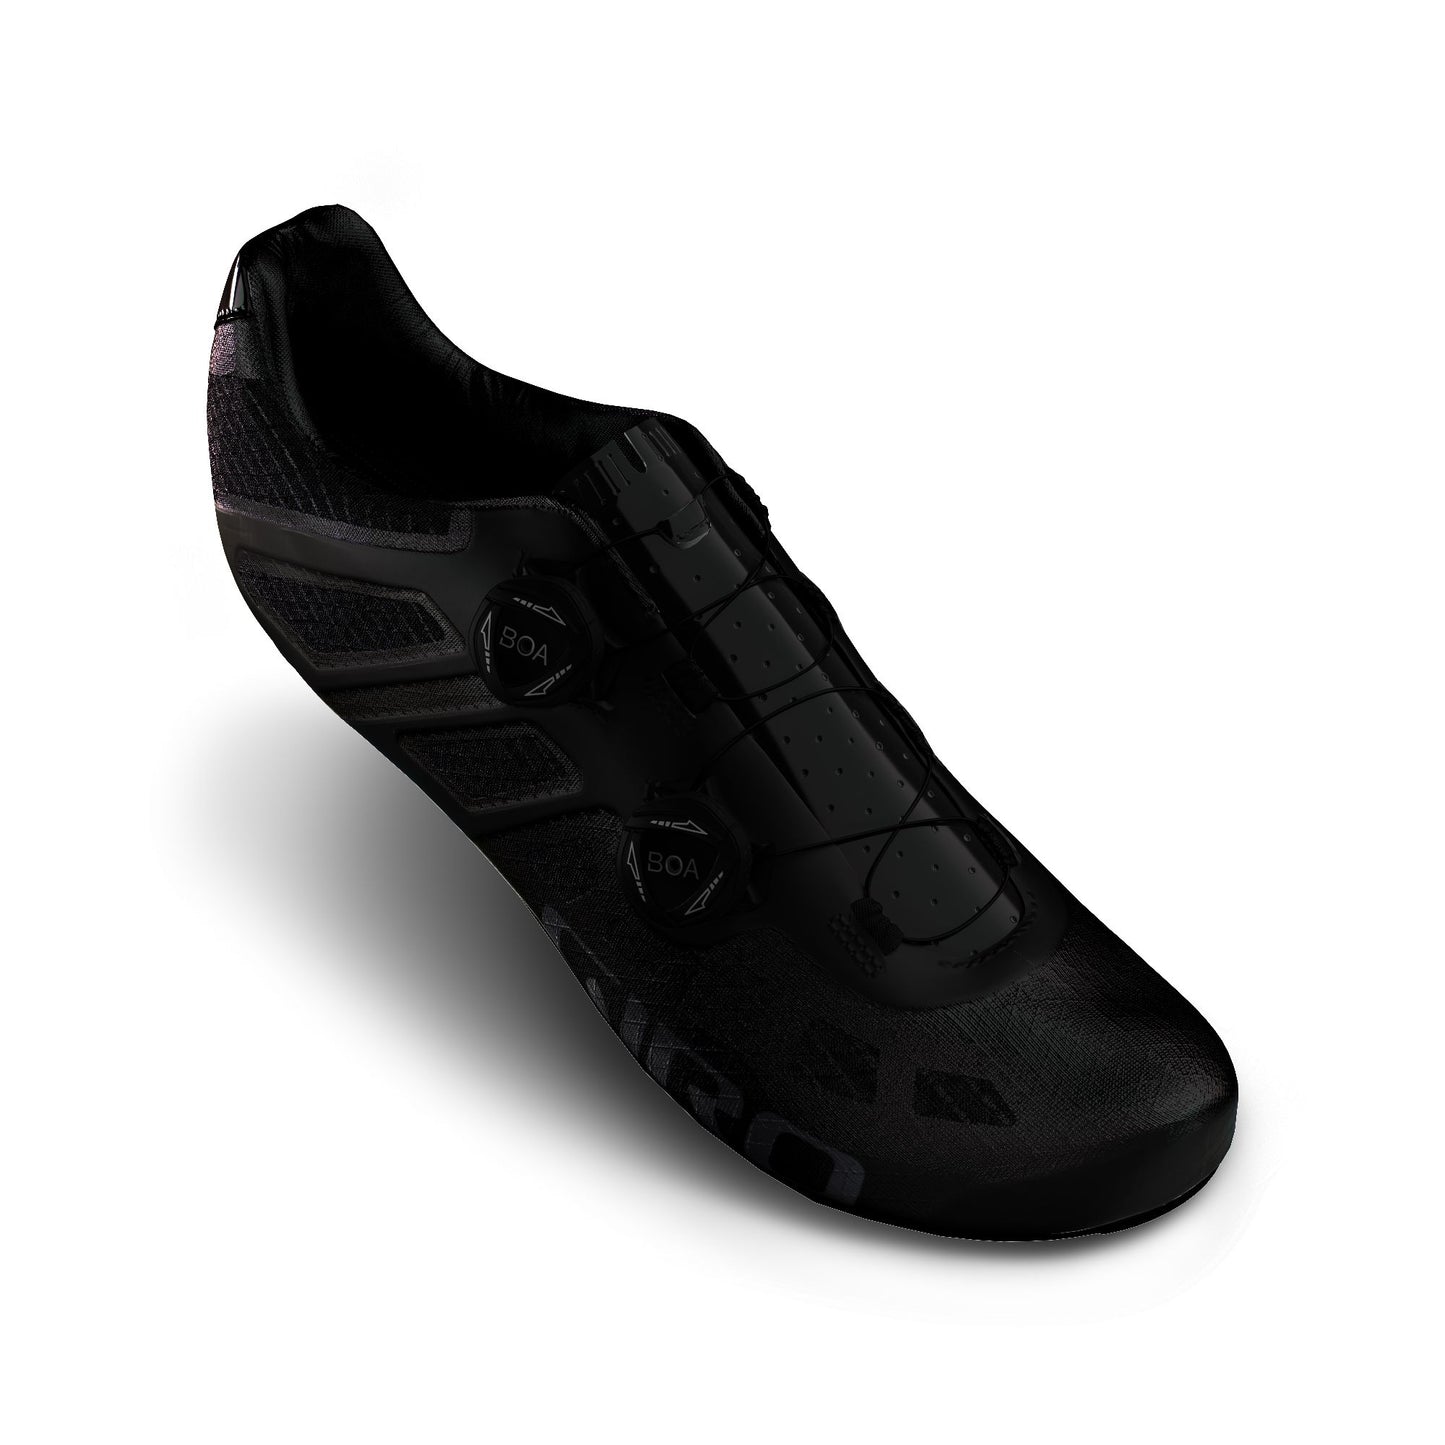 Giro Imperial Shoe Black Bike Shoes